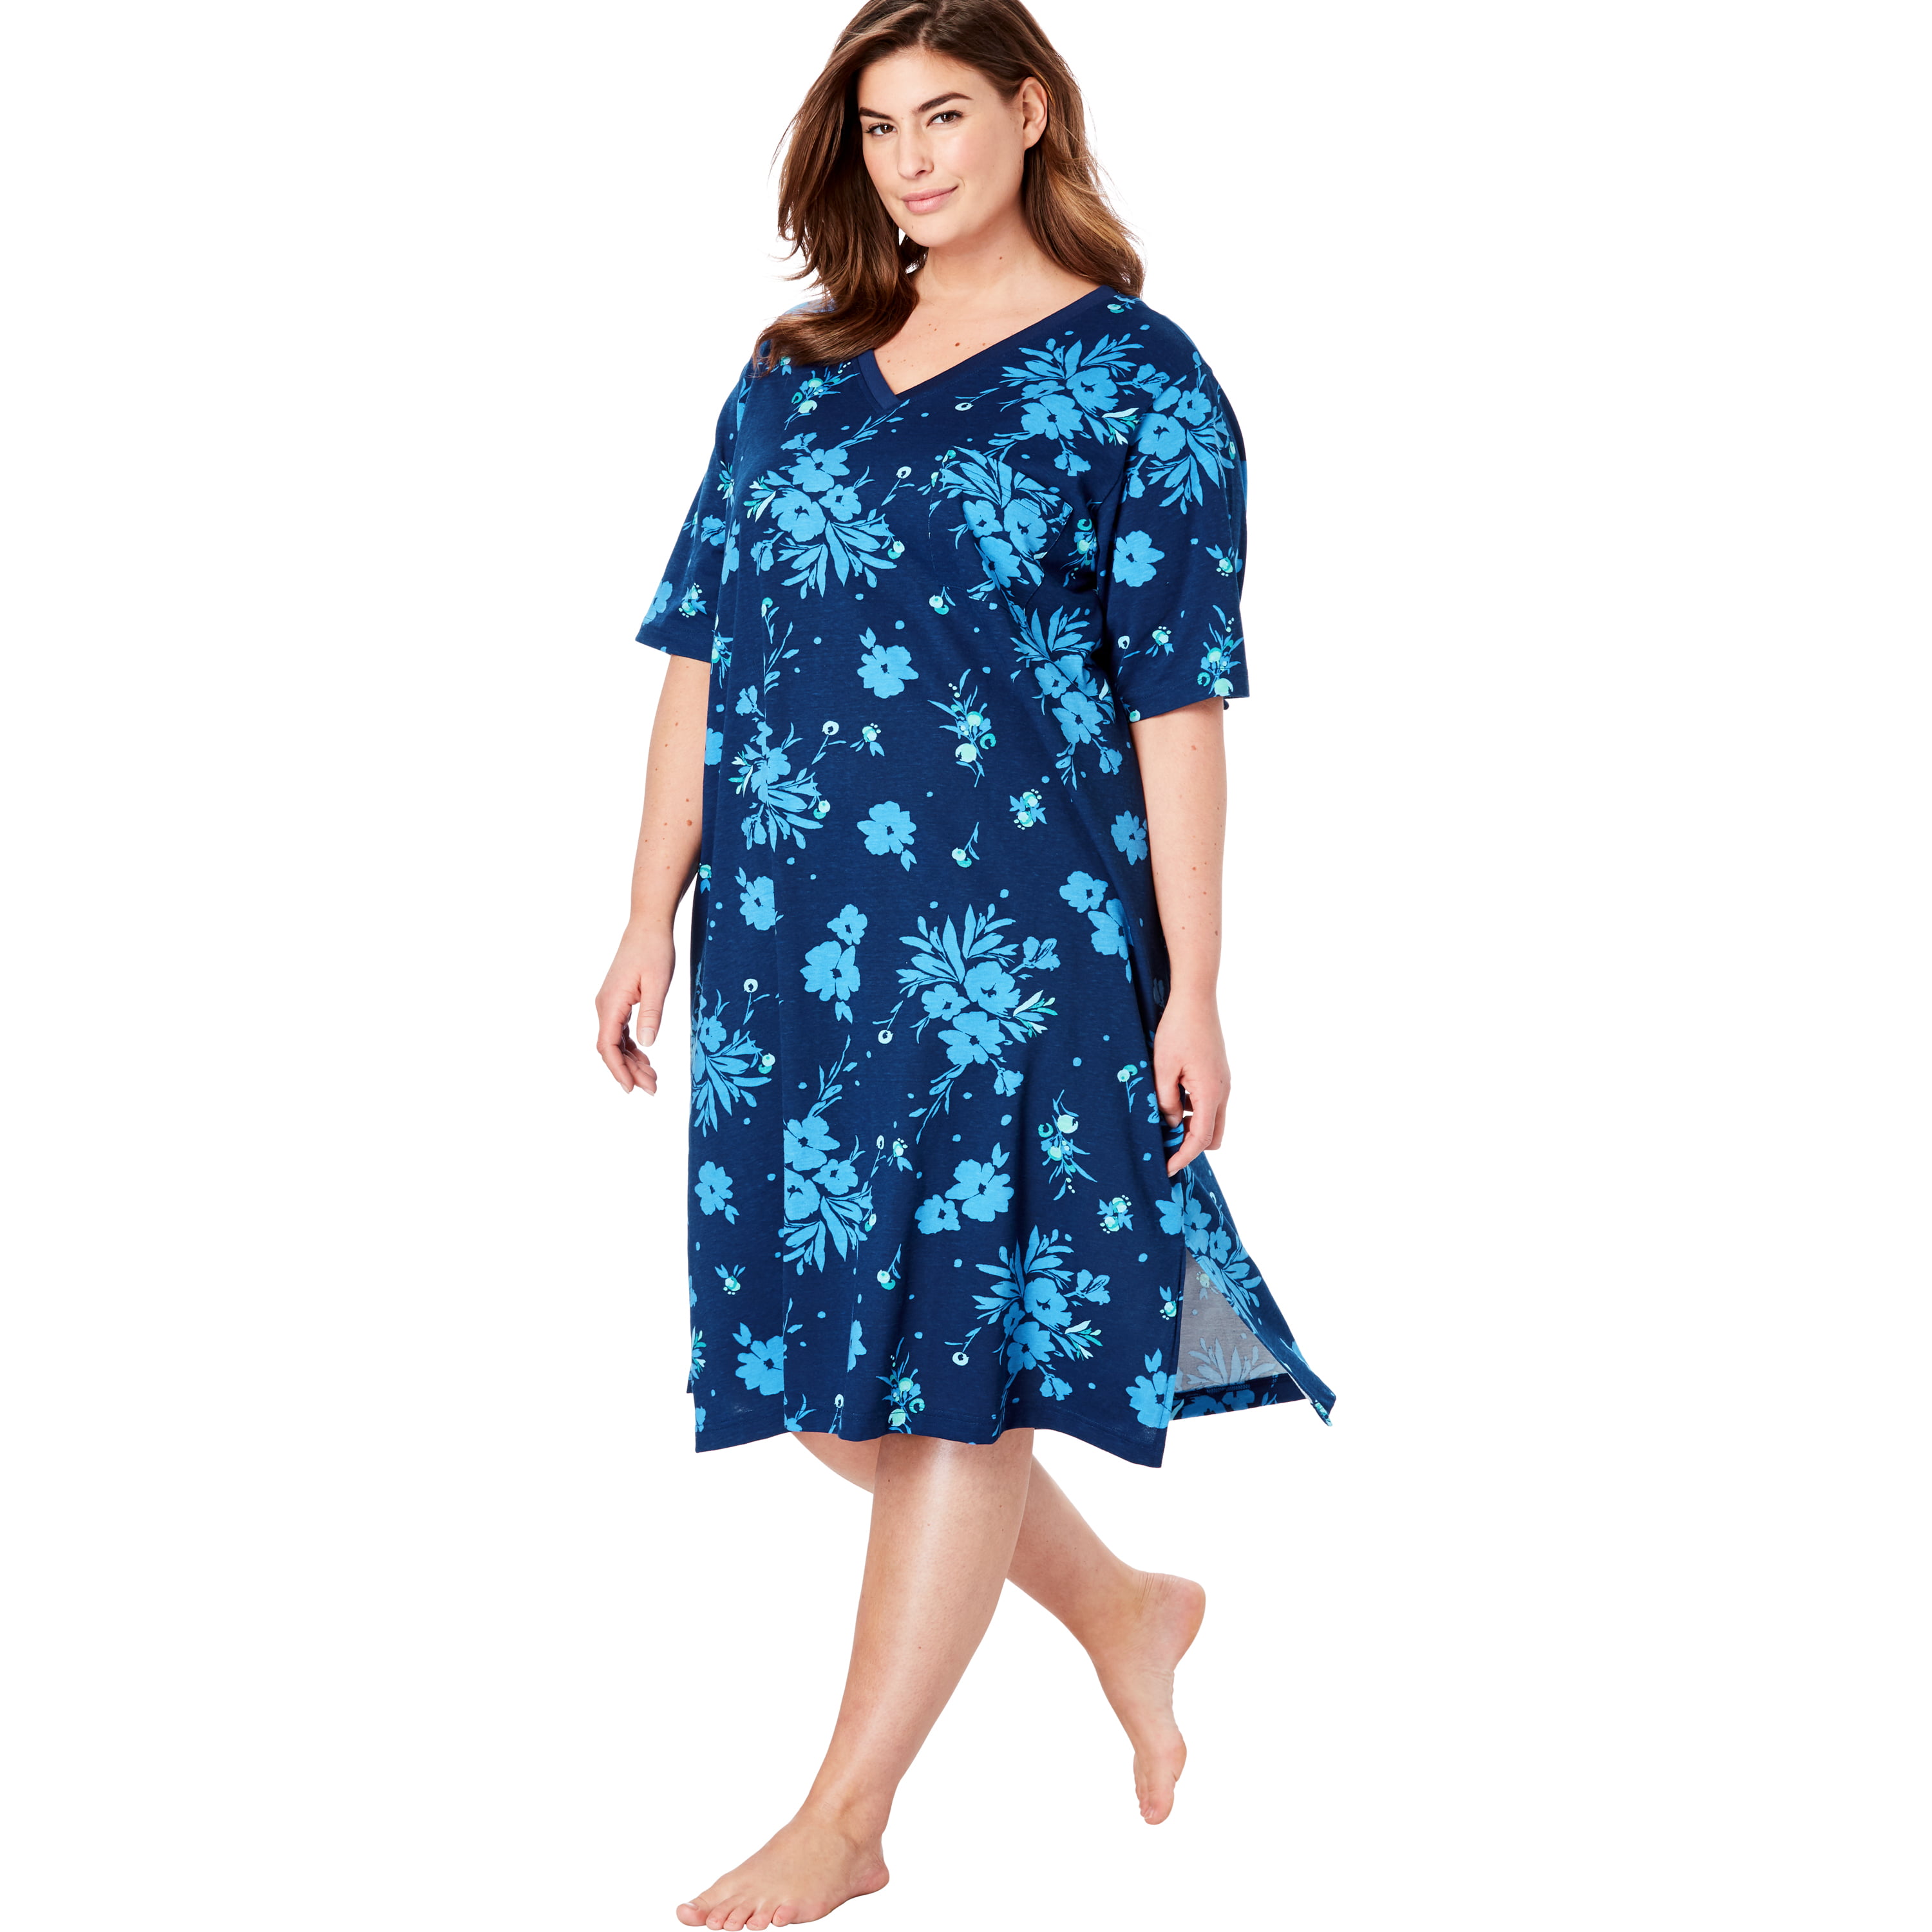 Dreams & Co Women's Plus Size Print Sleepshirt Nightgown 